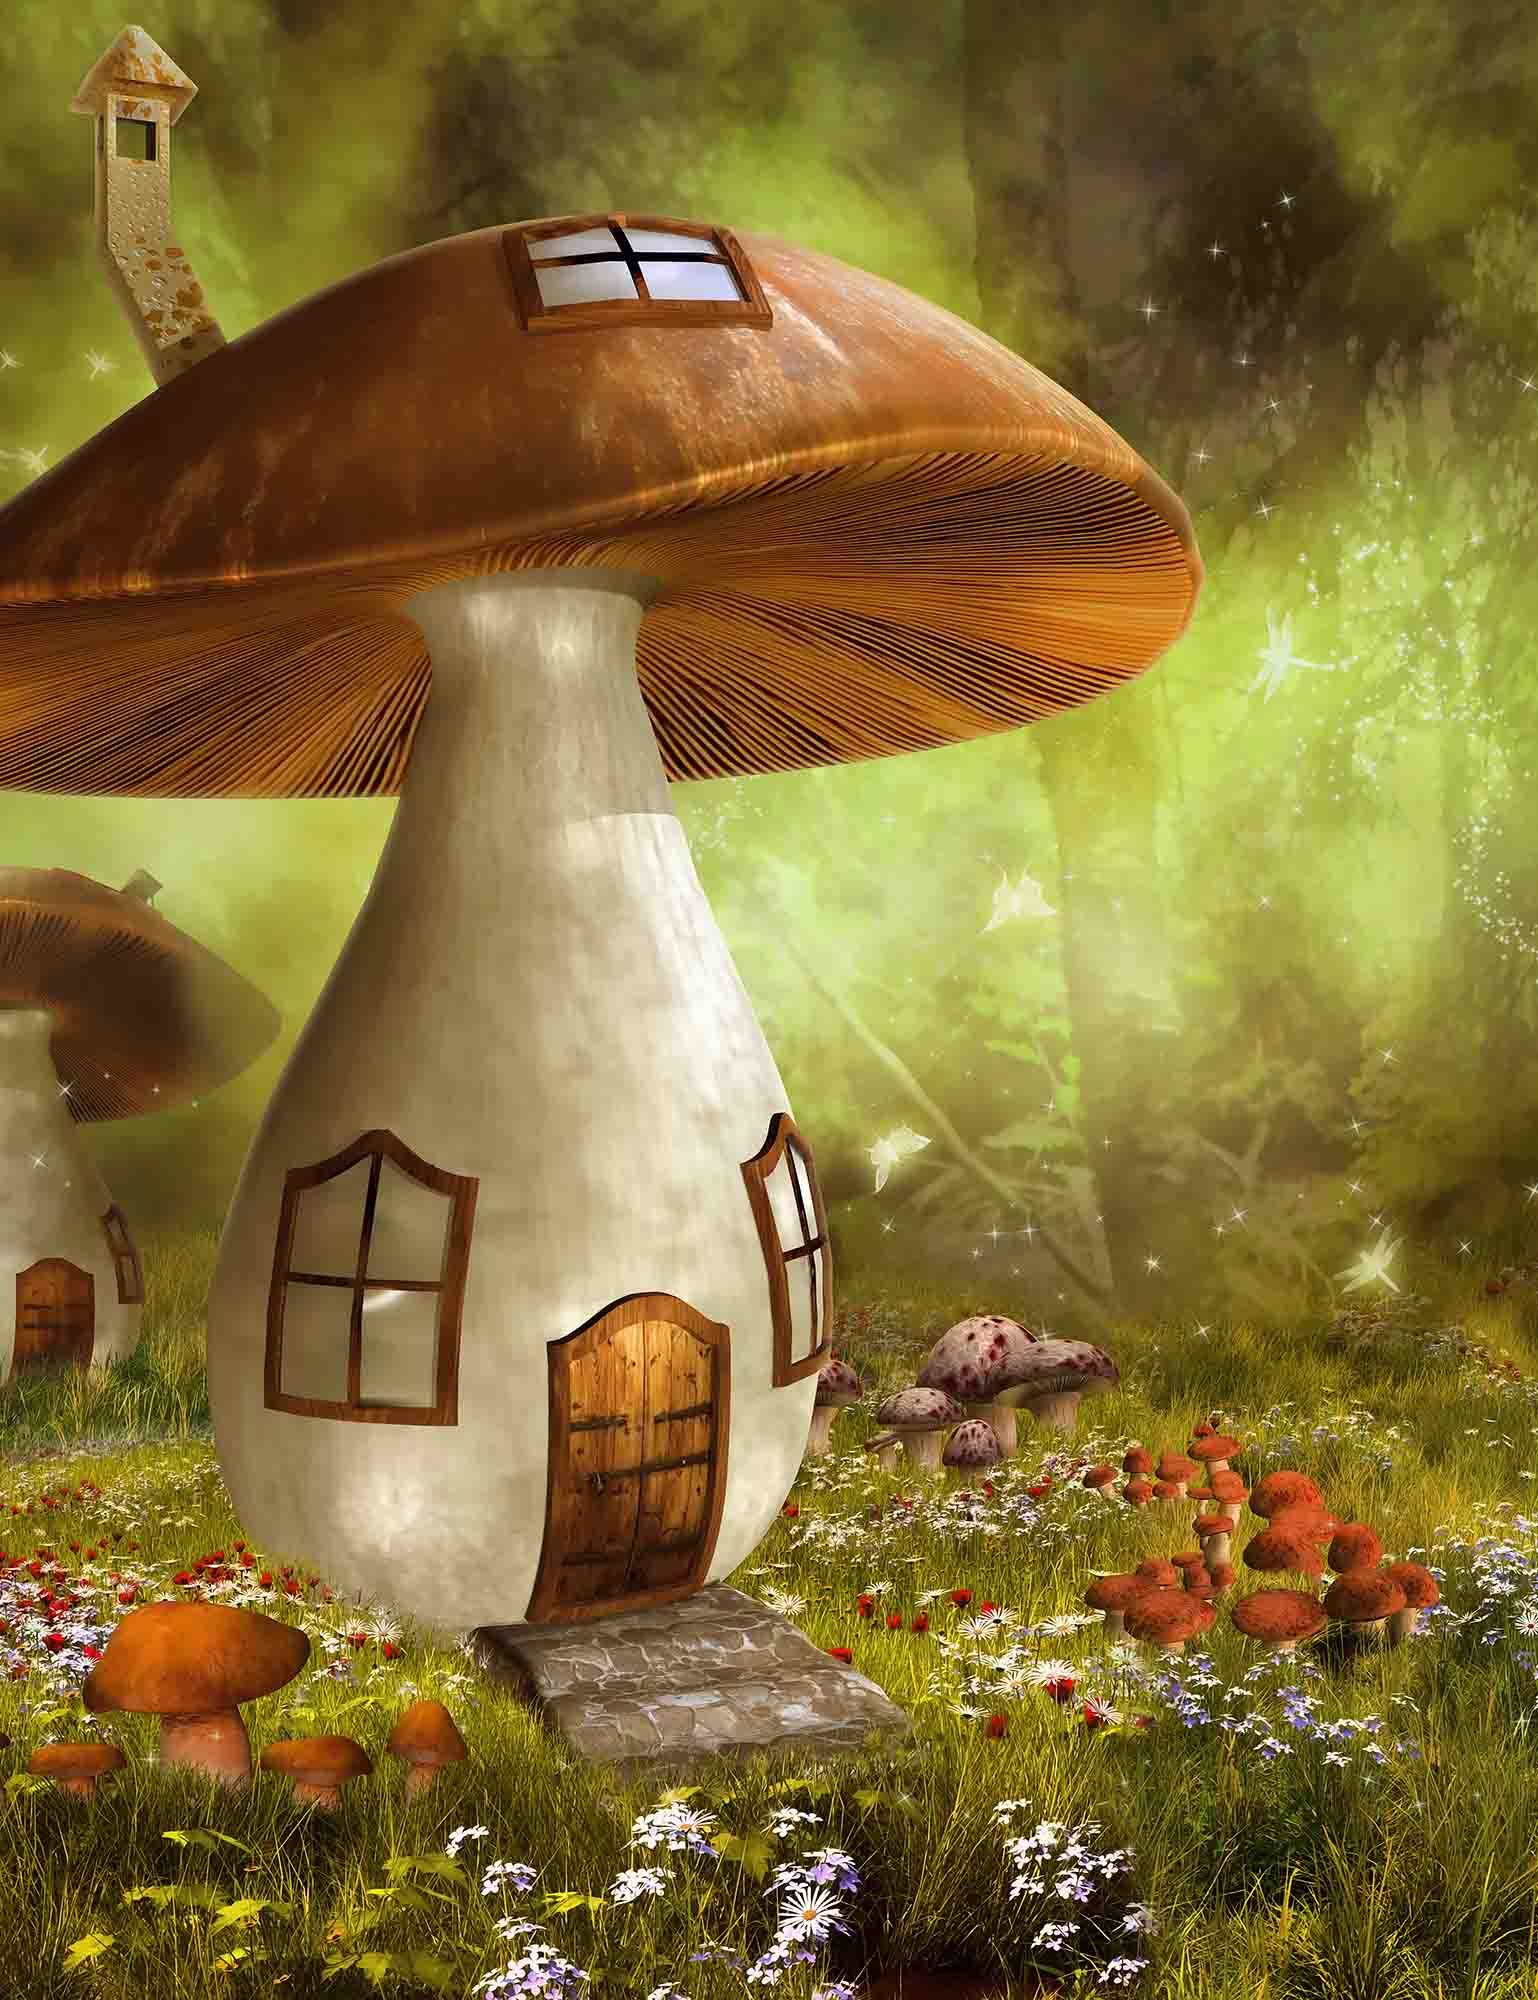 Mushroom Rooms With Pumpkin Photography For Halloween Backdrop Shopbackdrop